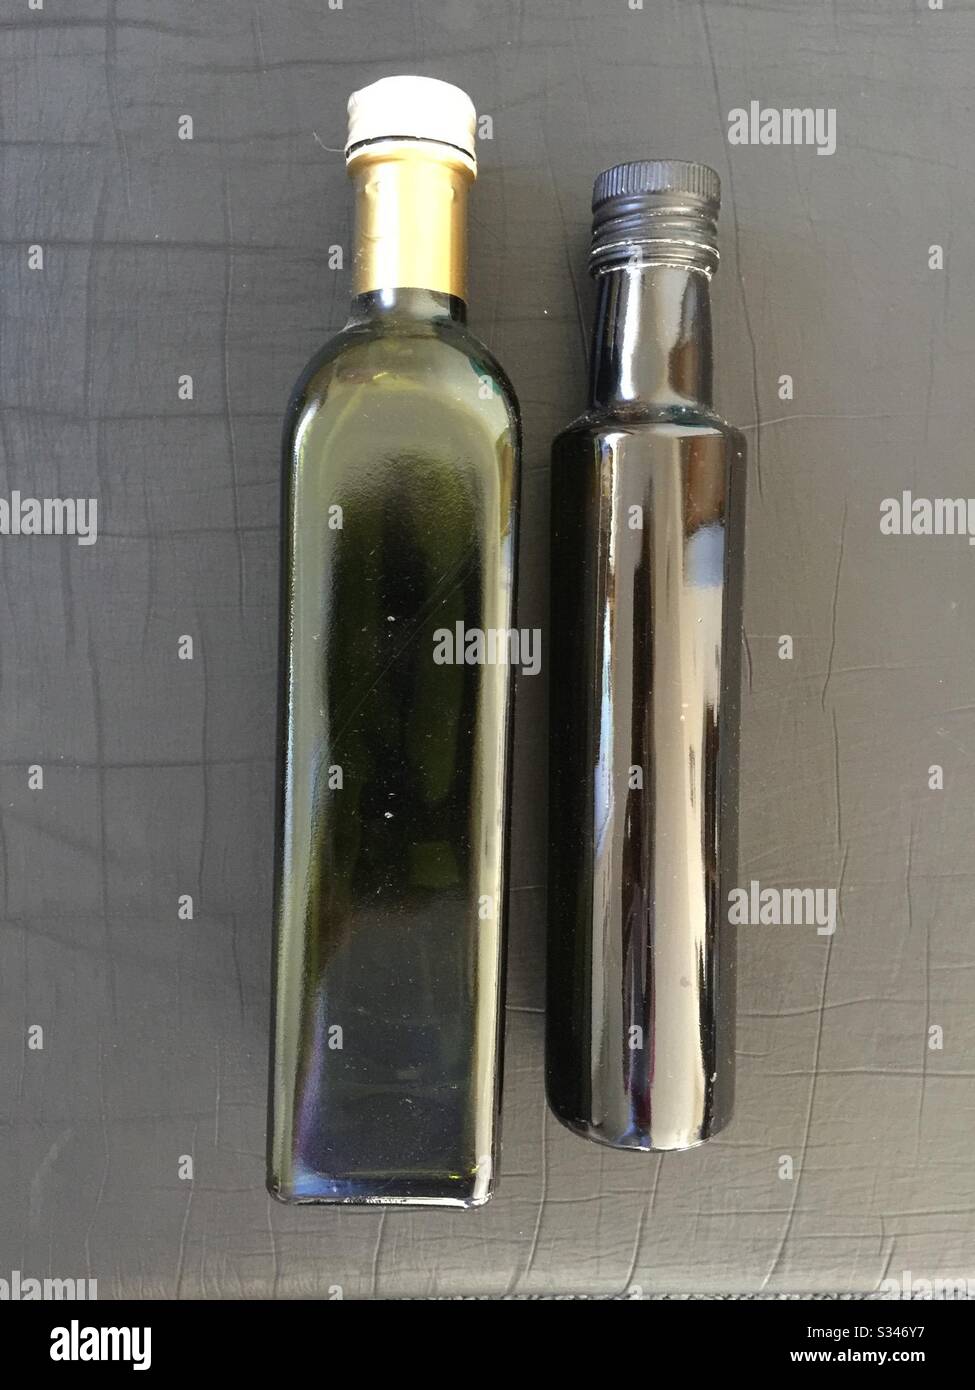 Bottle bottle green and amber glass Stock Photo